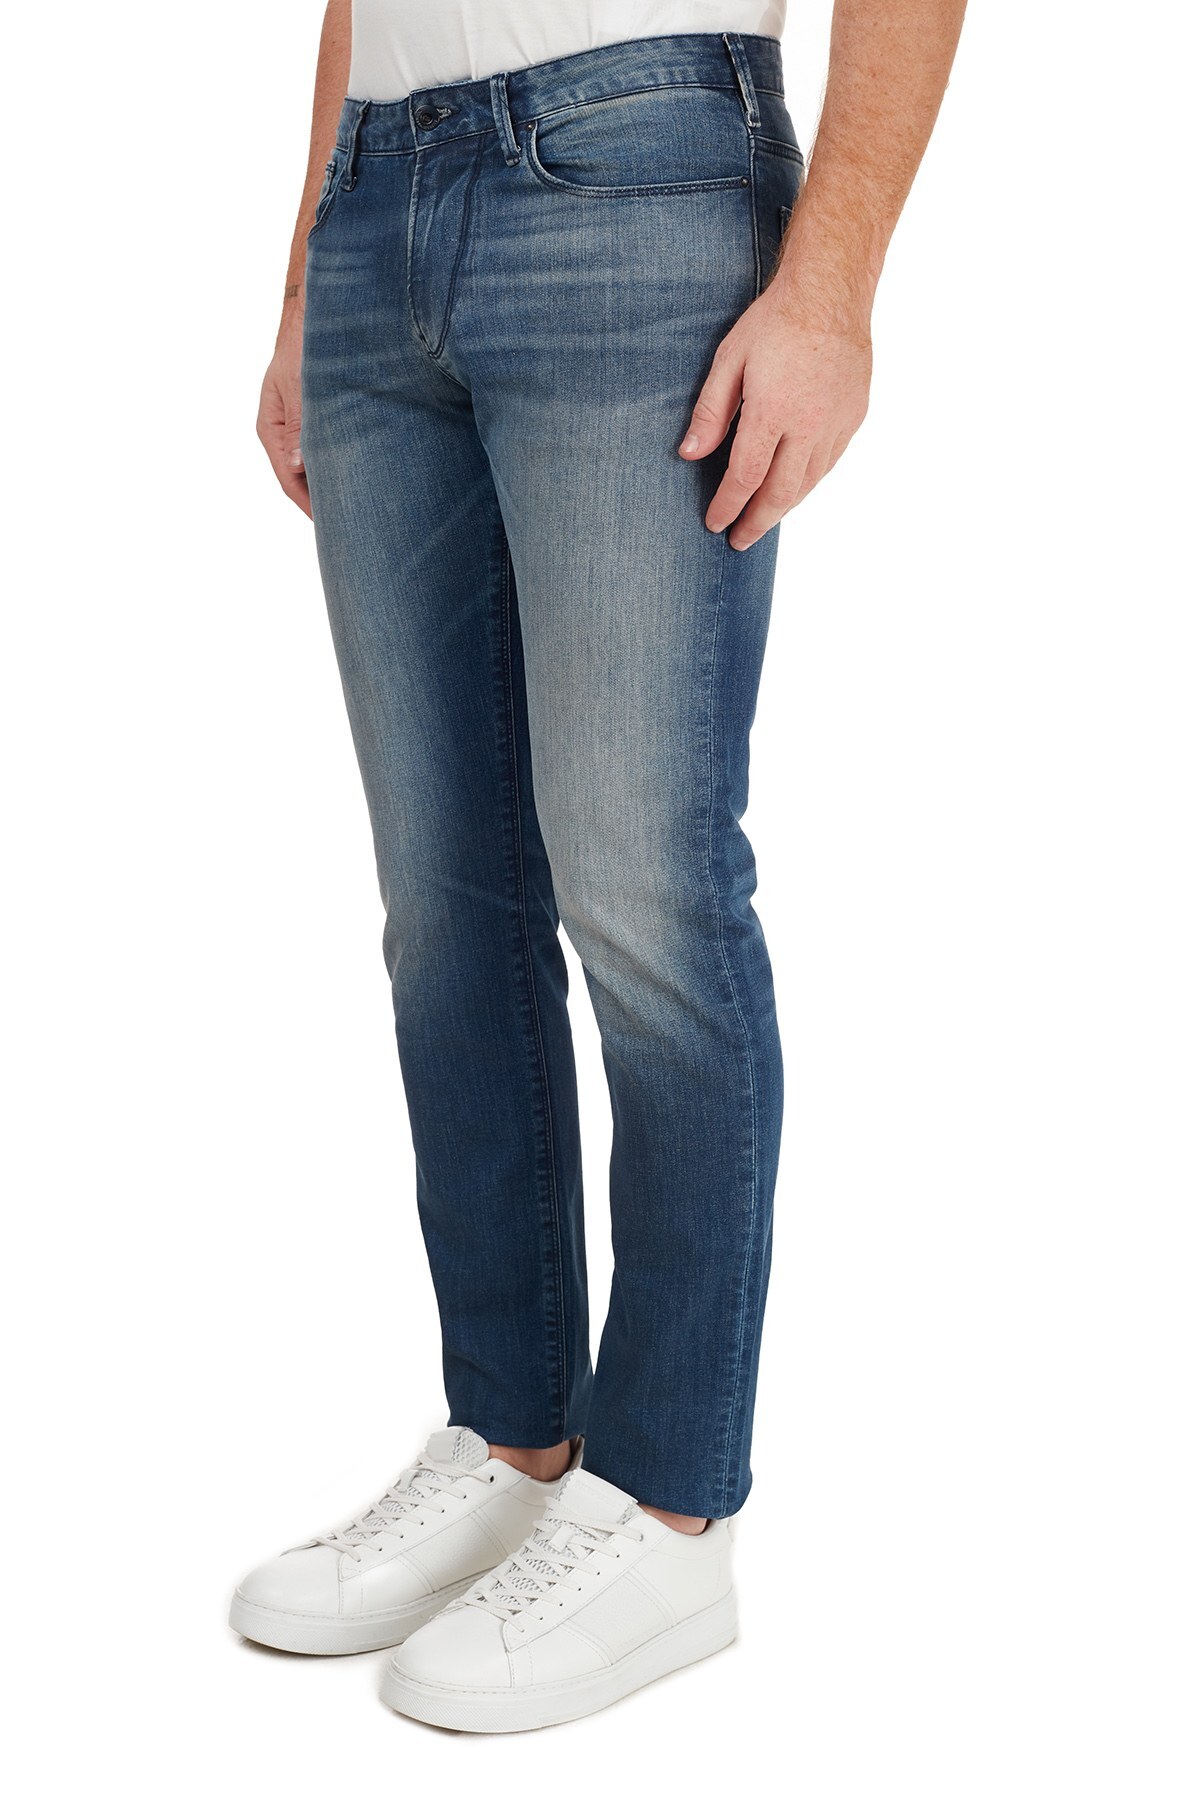 Emporio Armani Pamuklu Slim Fit J06 Jeans Erkek Kot Pantolon 8N1J06 1D19Z 0942 MAVİ